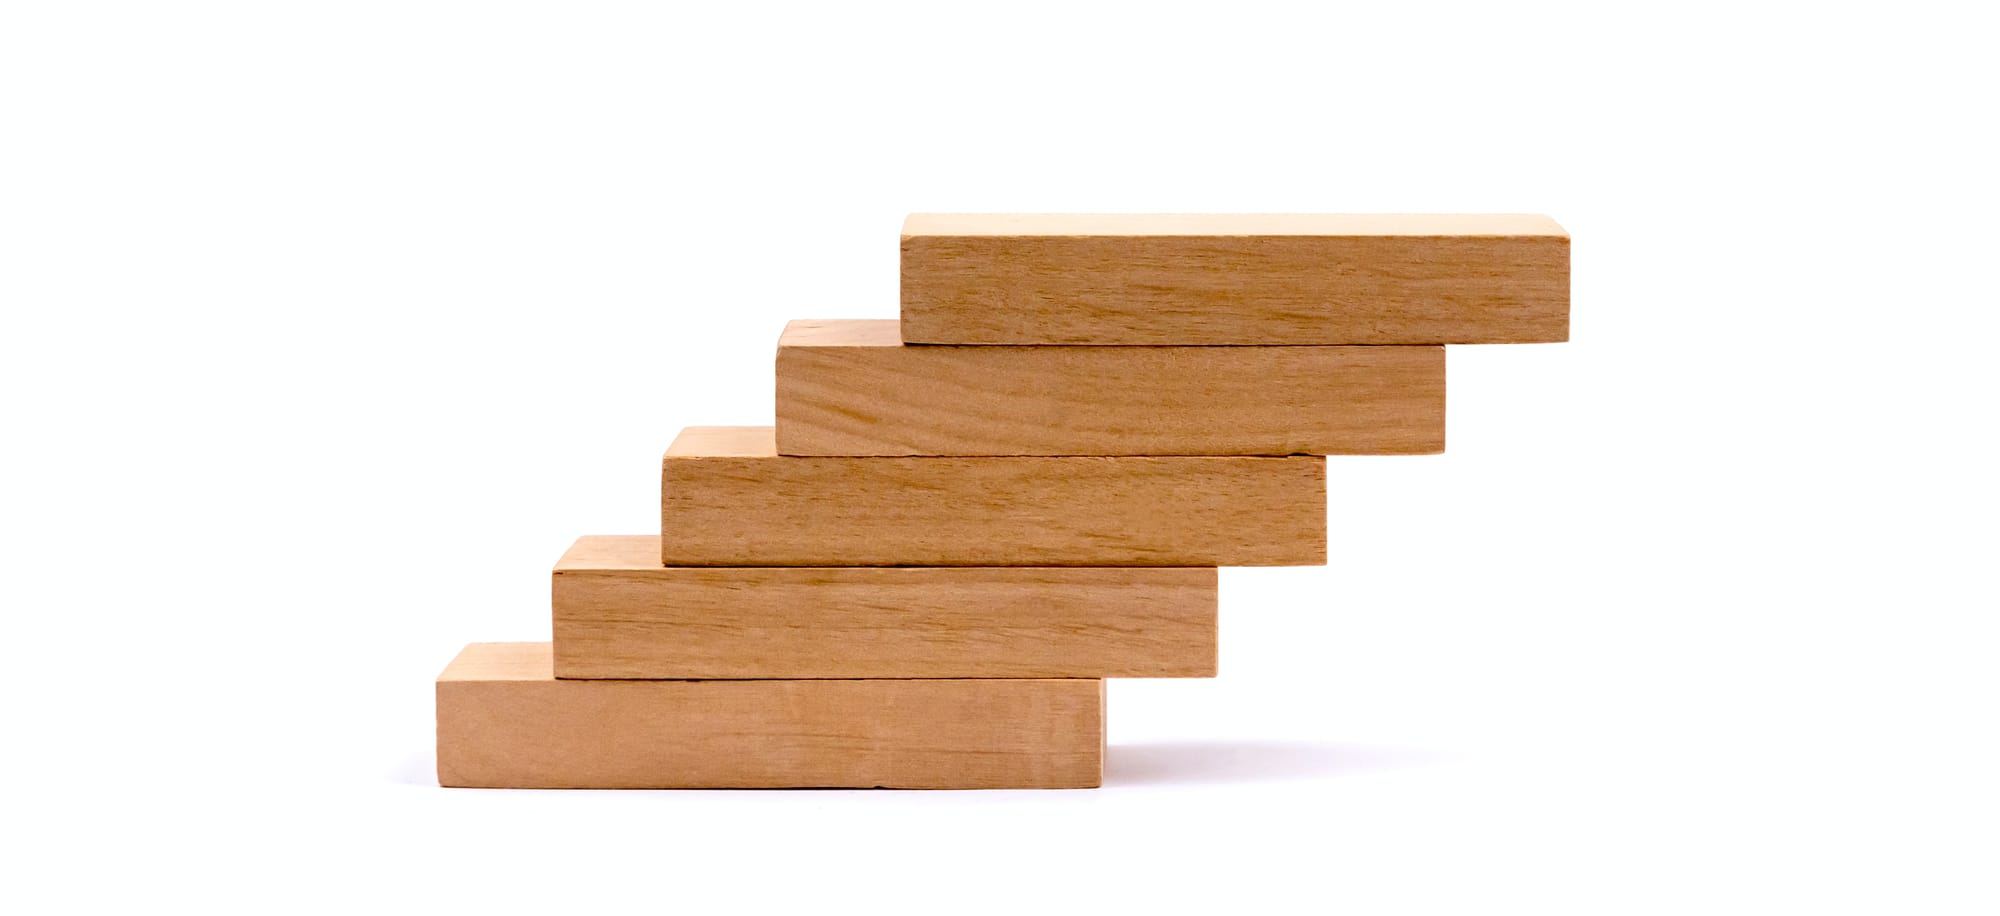 Pile of wooden blocks arranged as steps on minimal white background